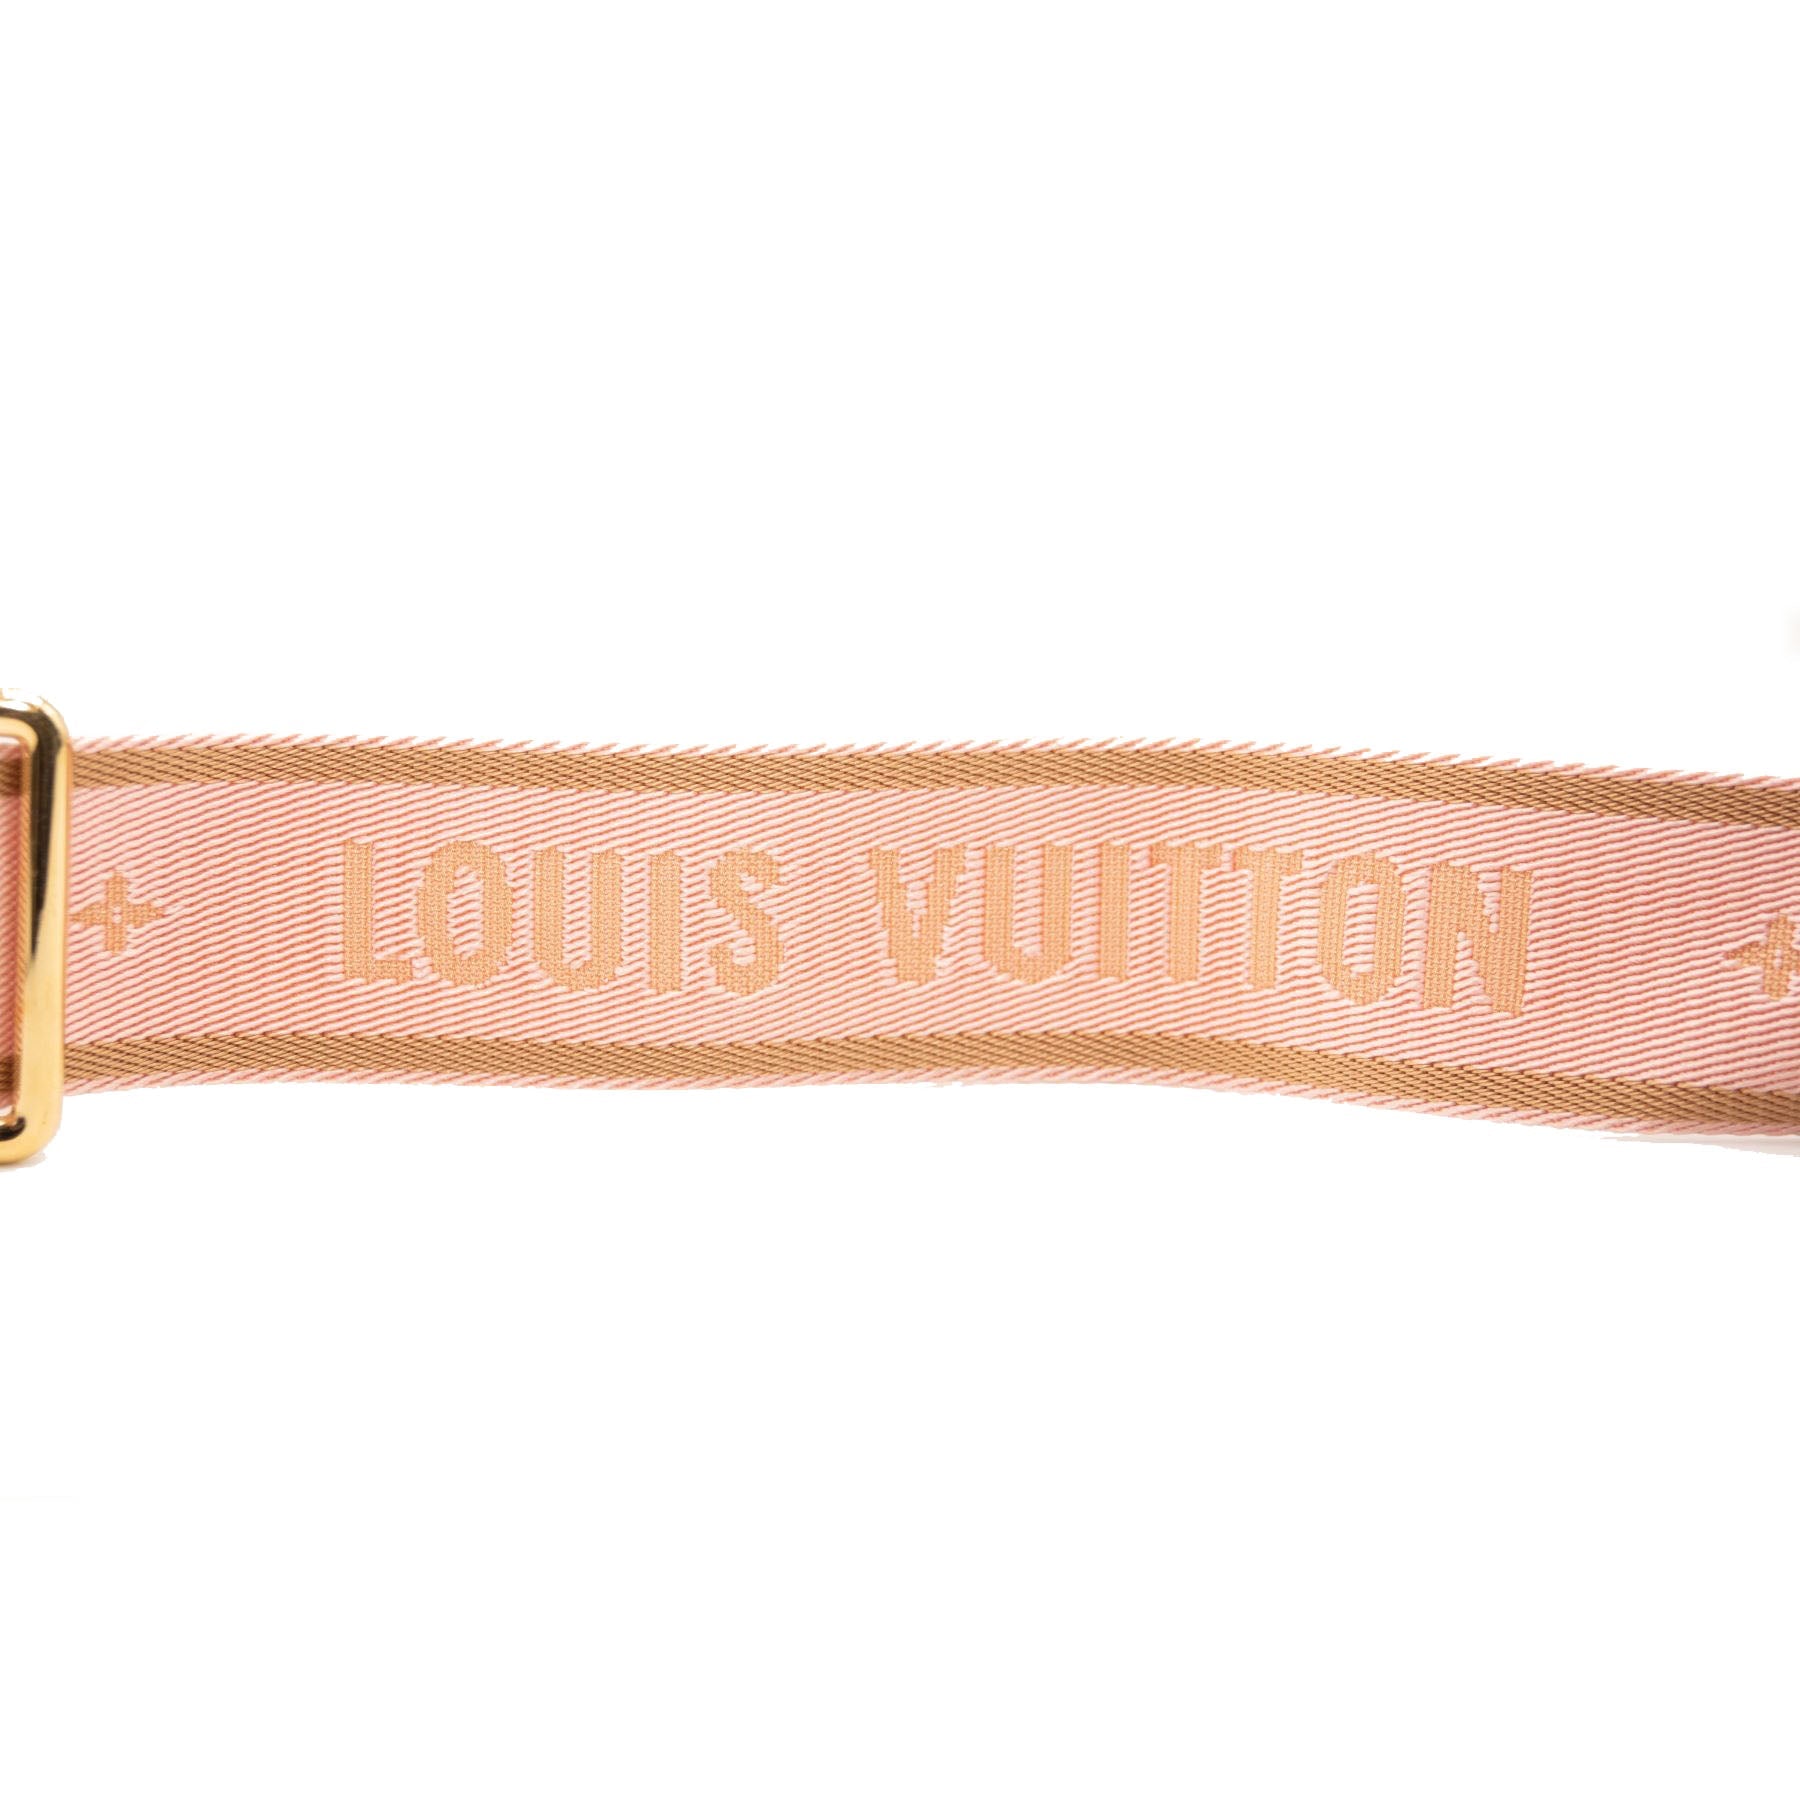 Louis Vuitton Multi Pochette, Pink Strap